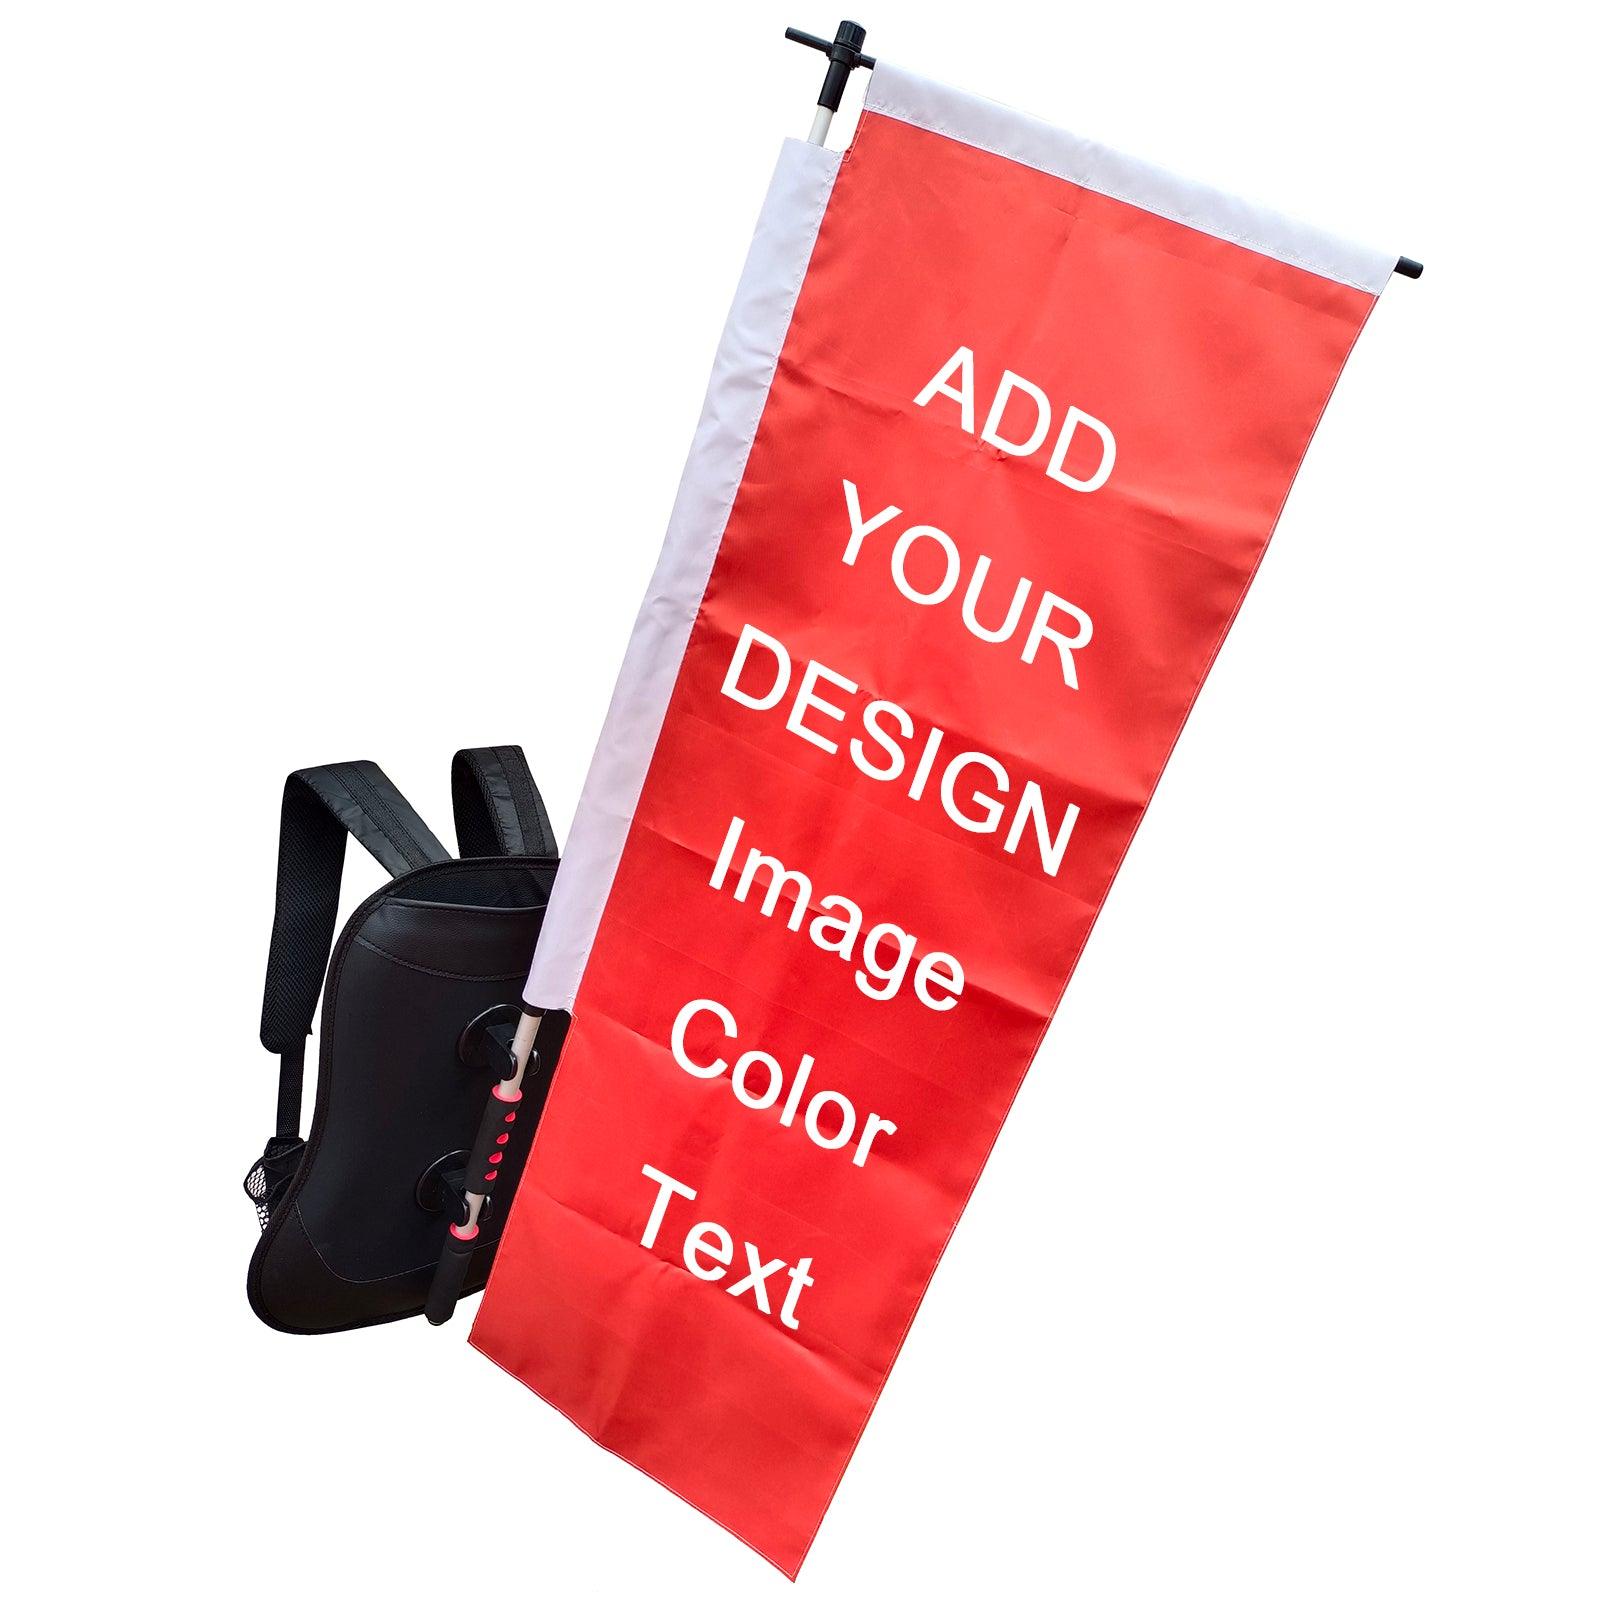 Custom Advertising Backpack Flags for Business